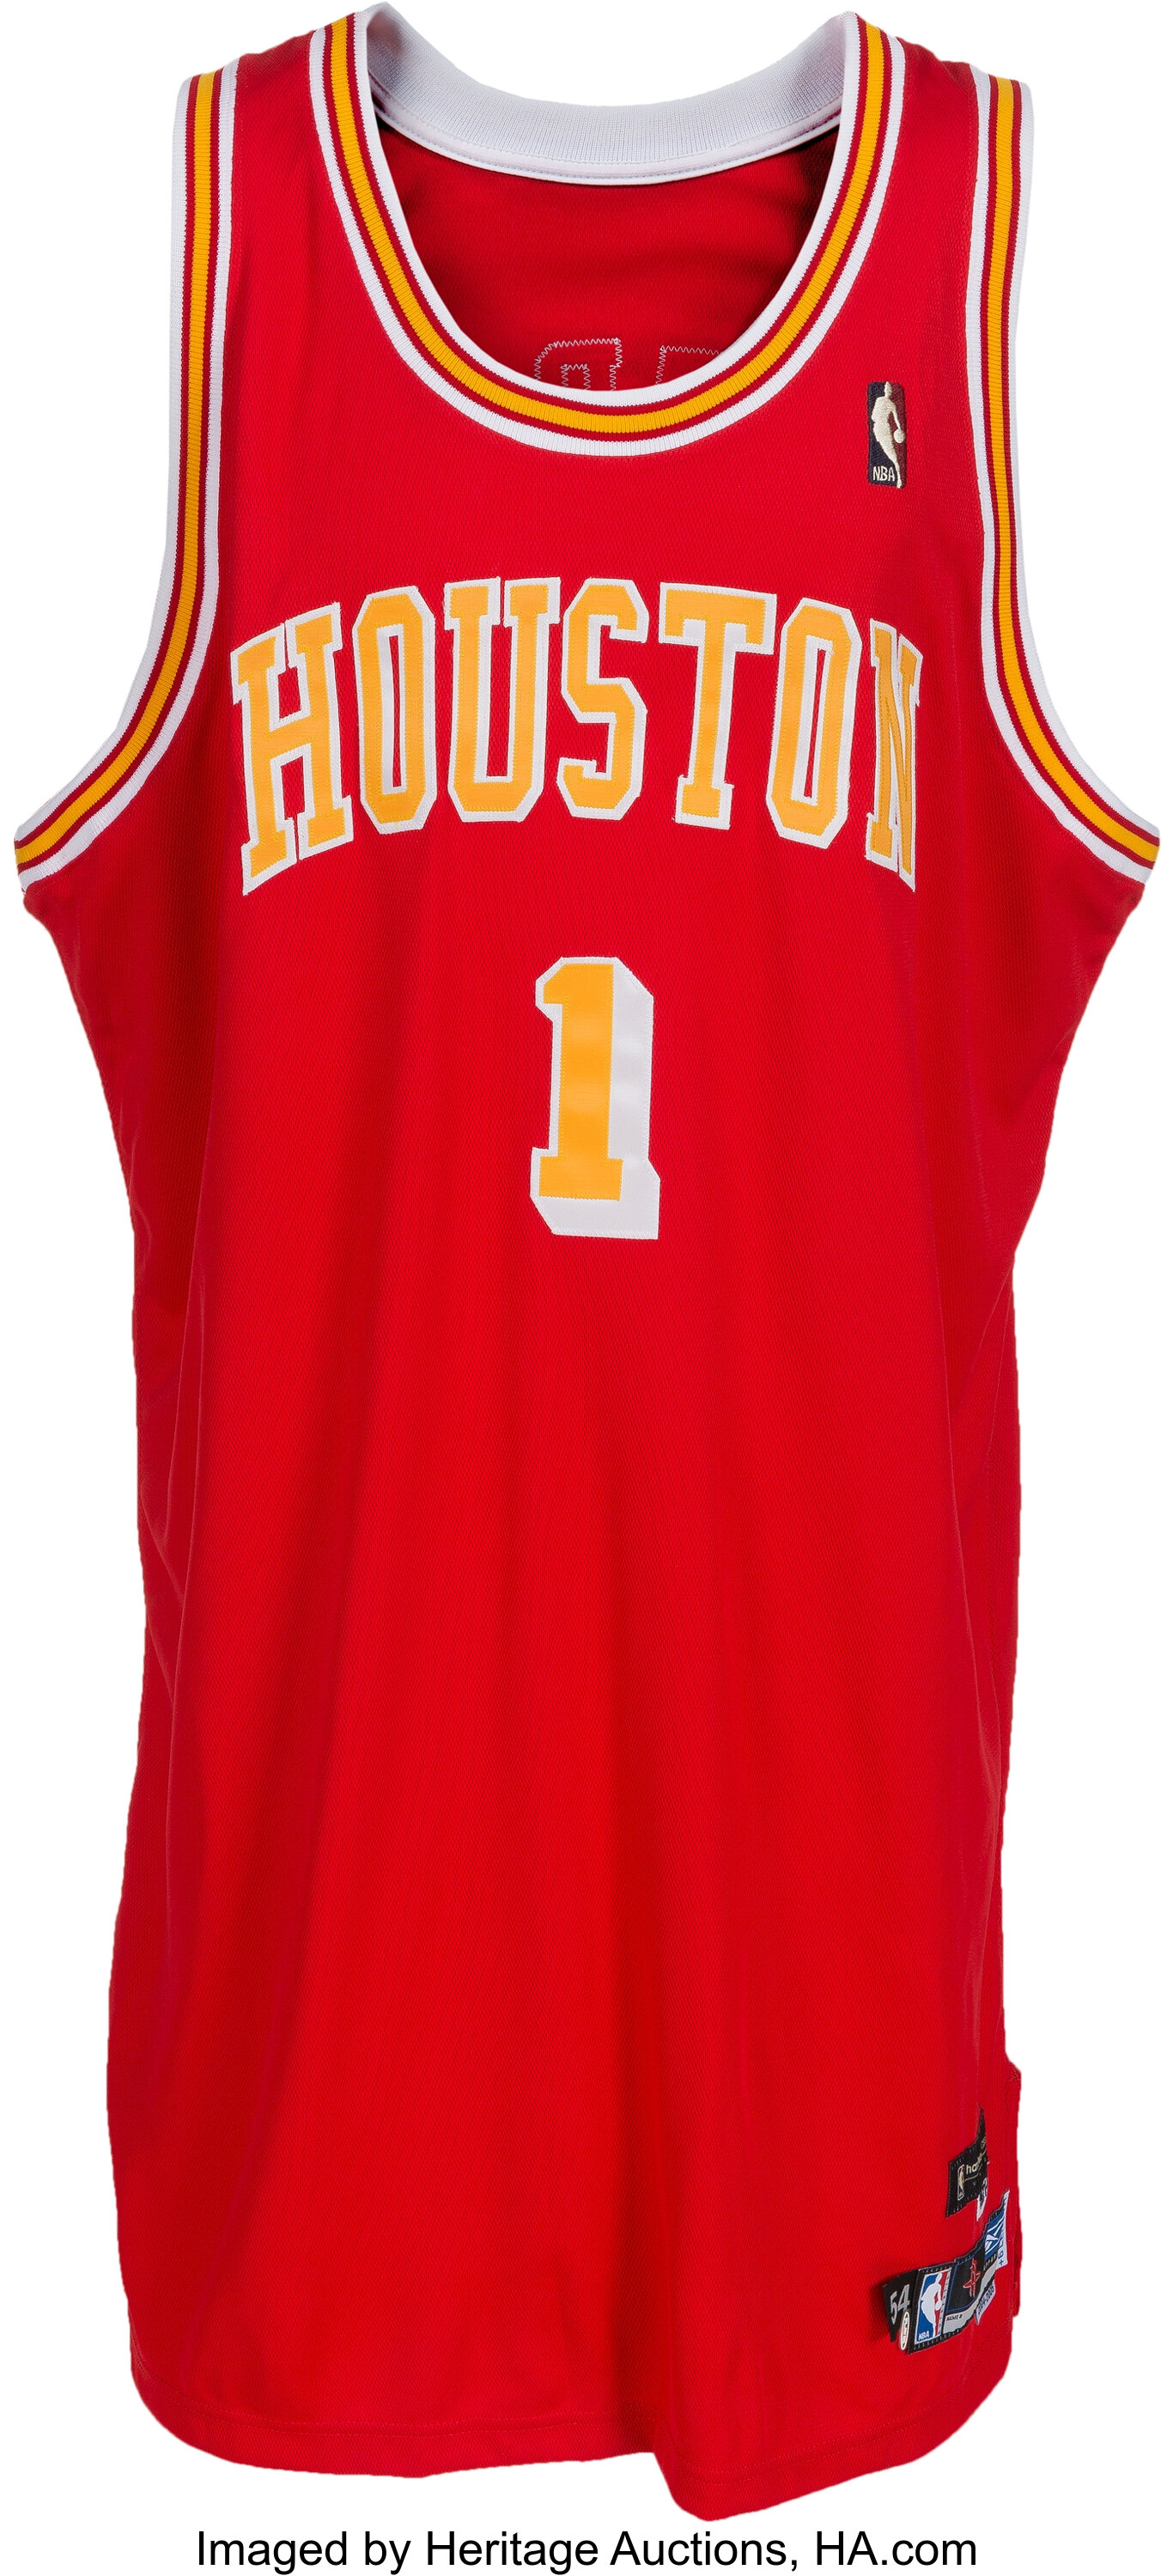 2004-05 Tracy McGrady Game Worn Houston Rockets Jersey.